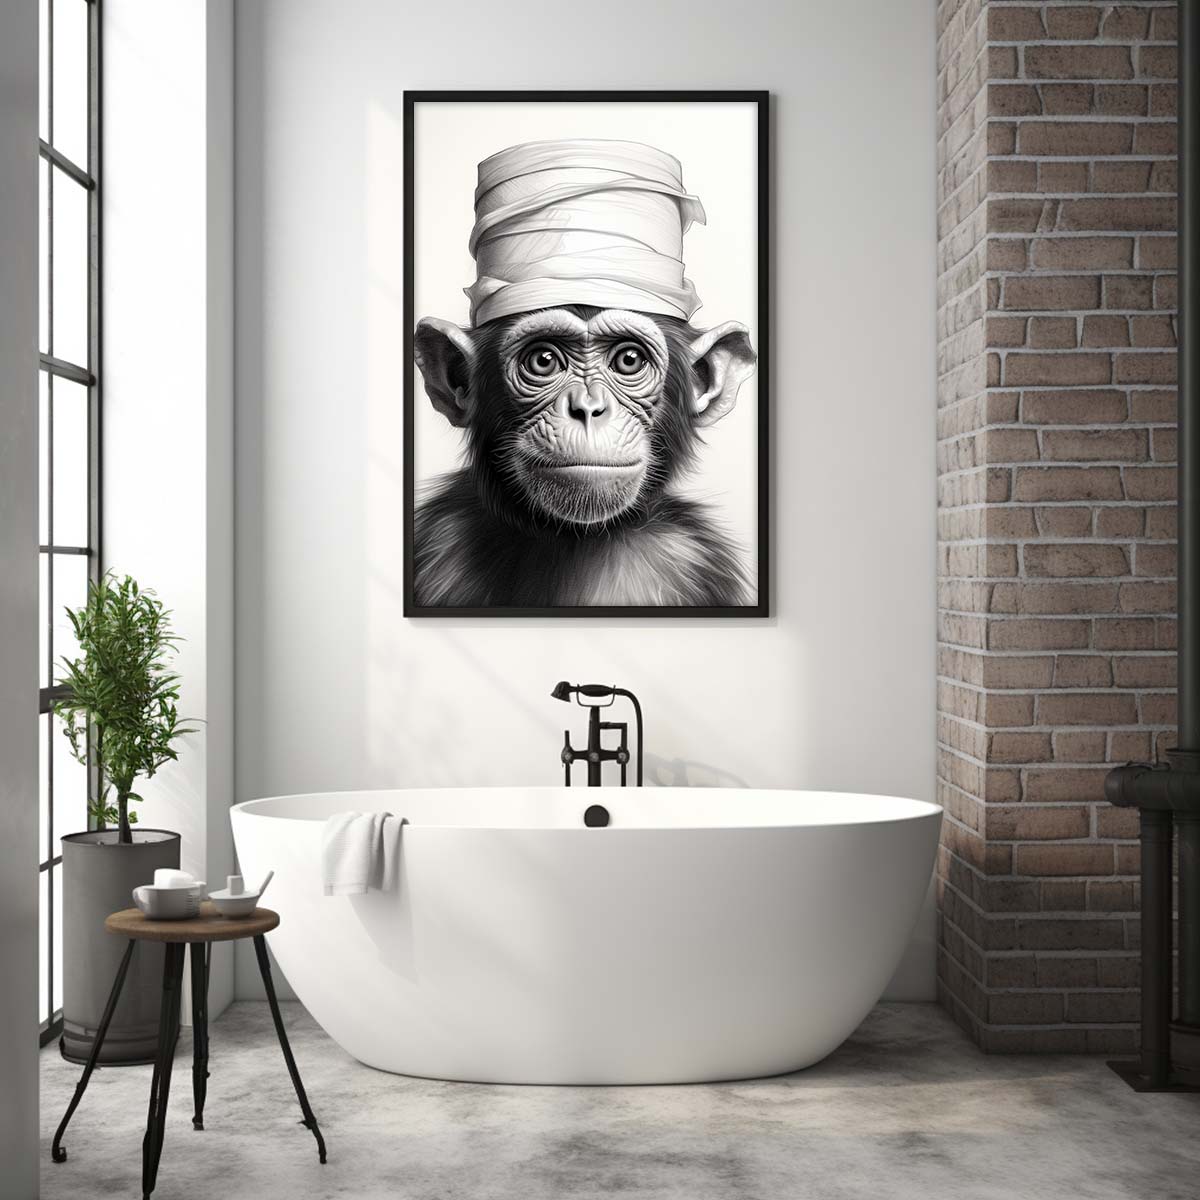 Monkey With Toilet Paper Canvas Art, Monkey With Toilet Paper, Funny Monkey Art, Bathroom Wall Decor, Home Decor, Bathroom Wall Art, Animal Wall Decor, Animal Decor, Animal Gift